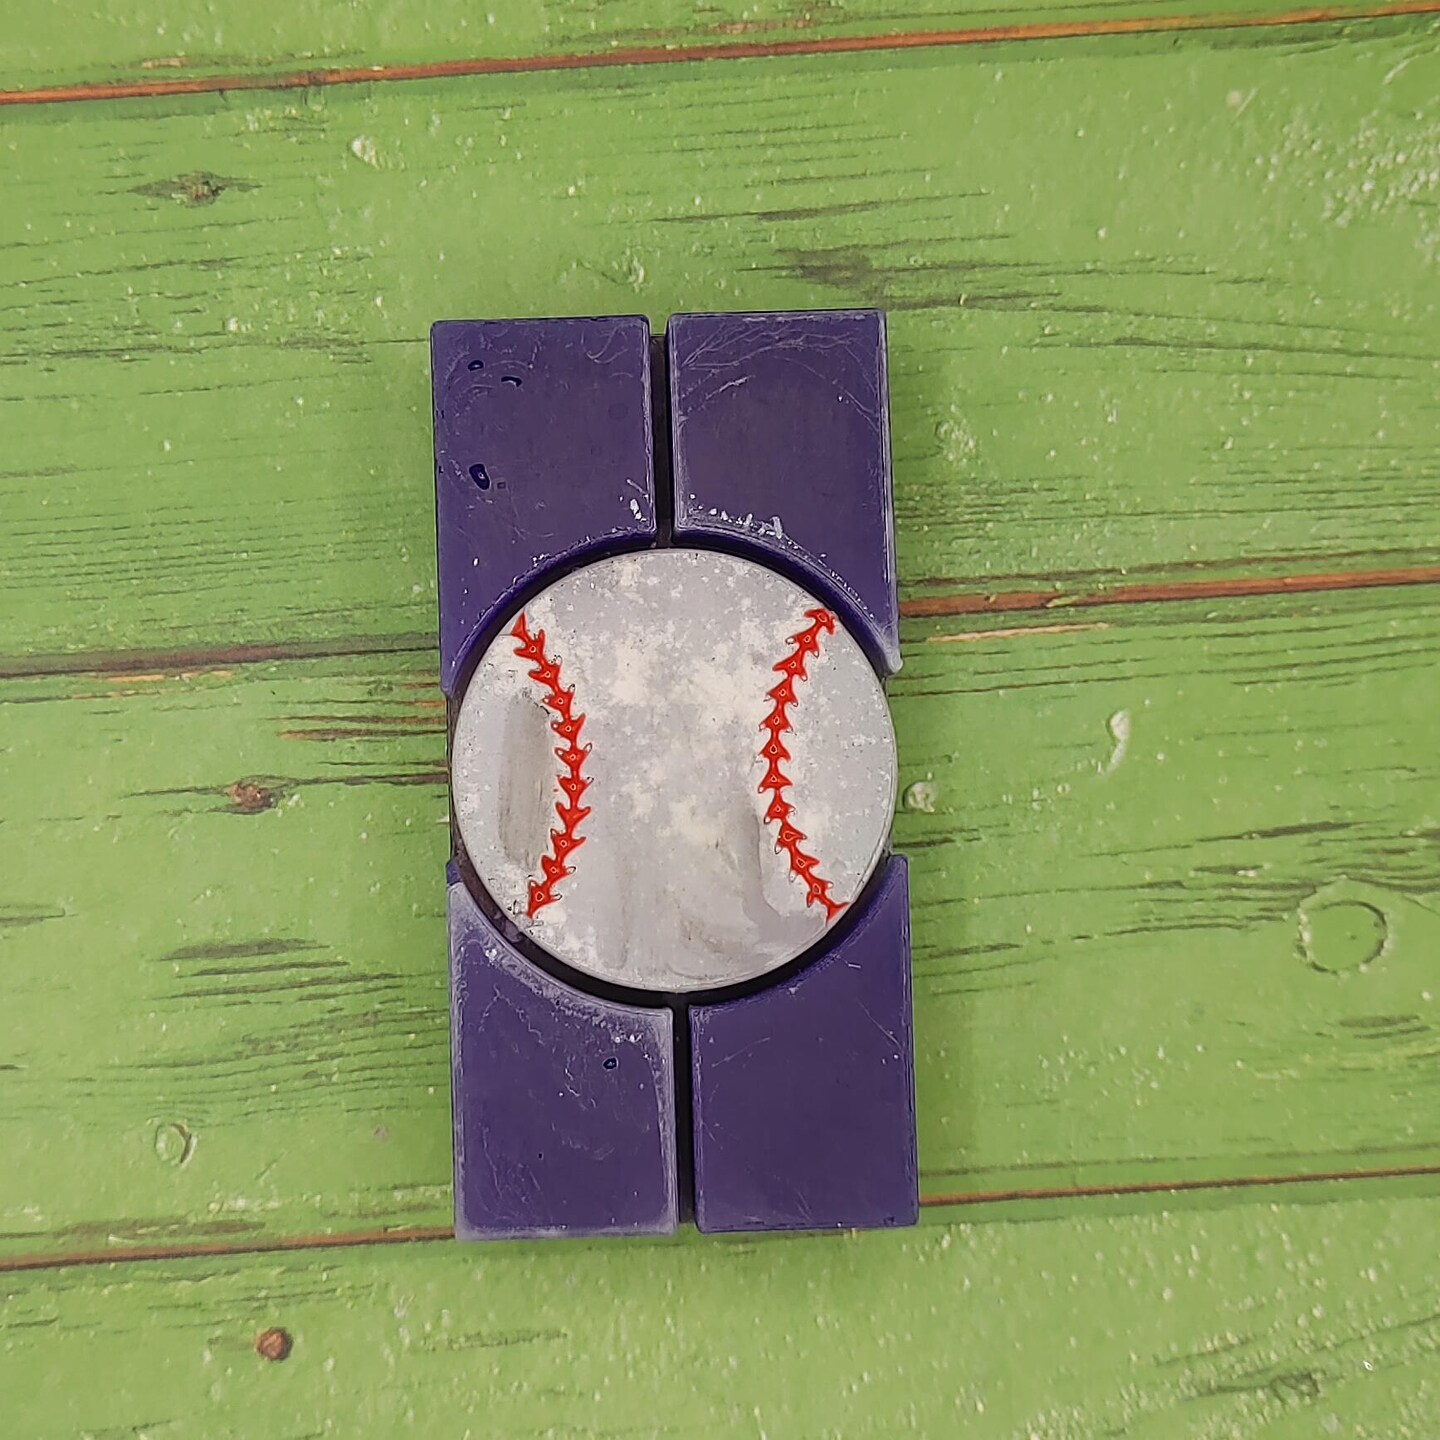 Baseball Snap Out Center Wax Melt Snap Bar Silicone Mold